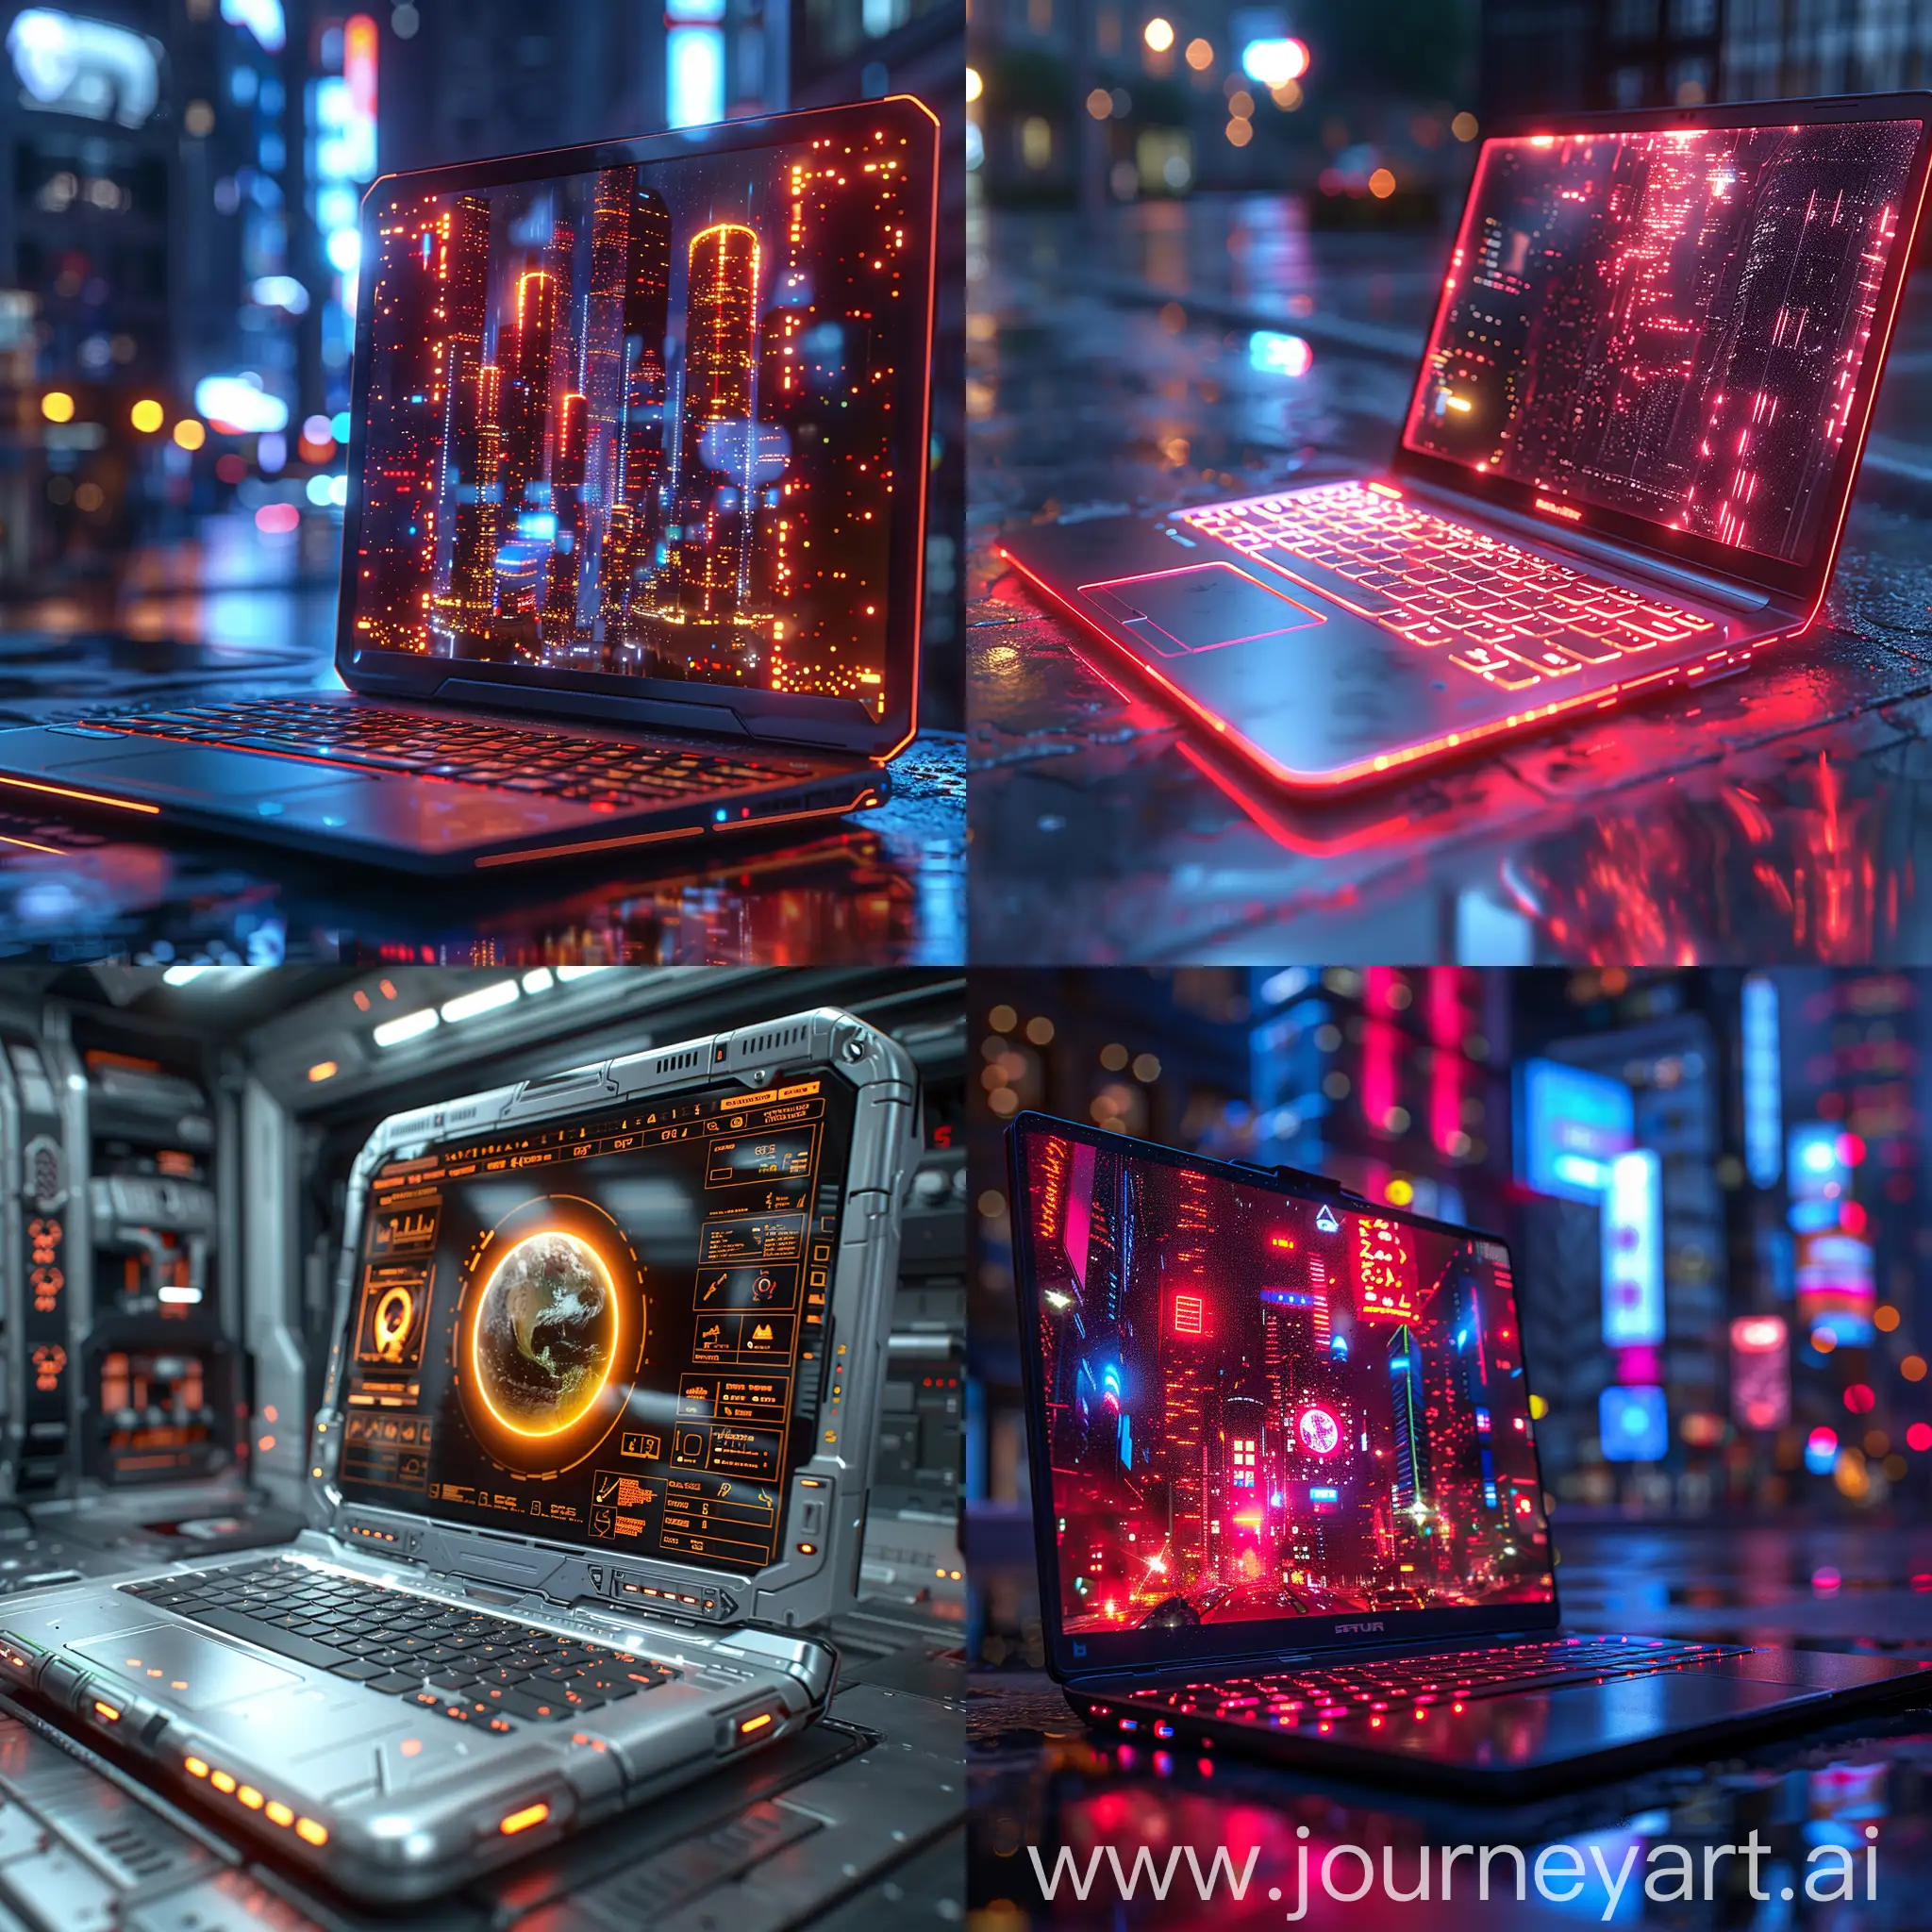 Futuristic-Utopian-Laptop-in-Blade-Runner-Style